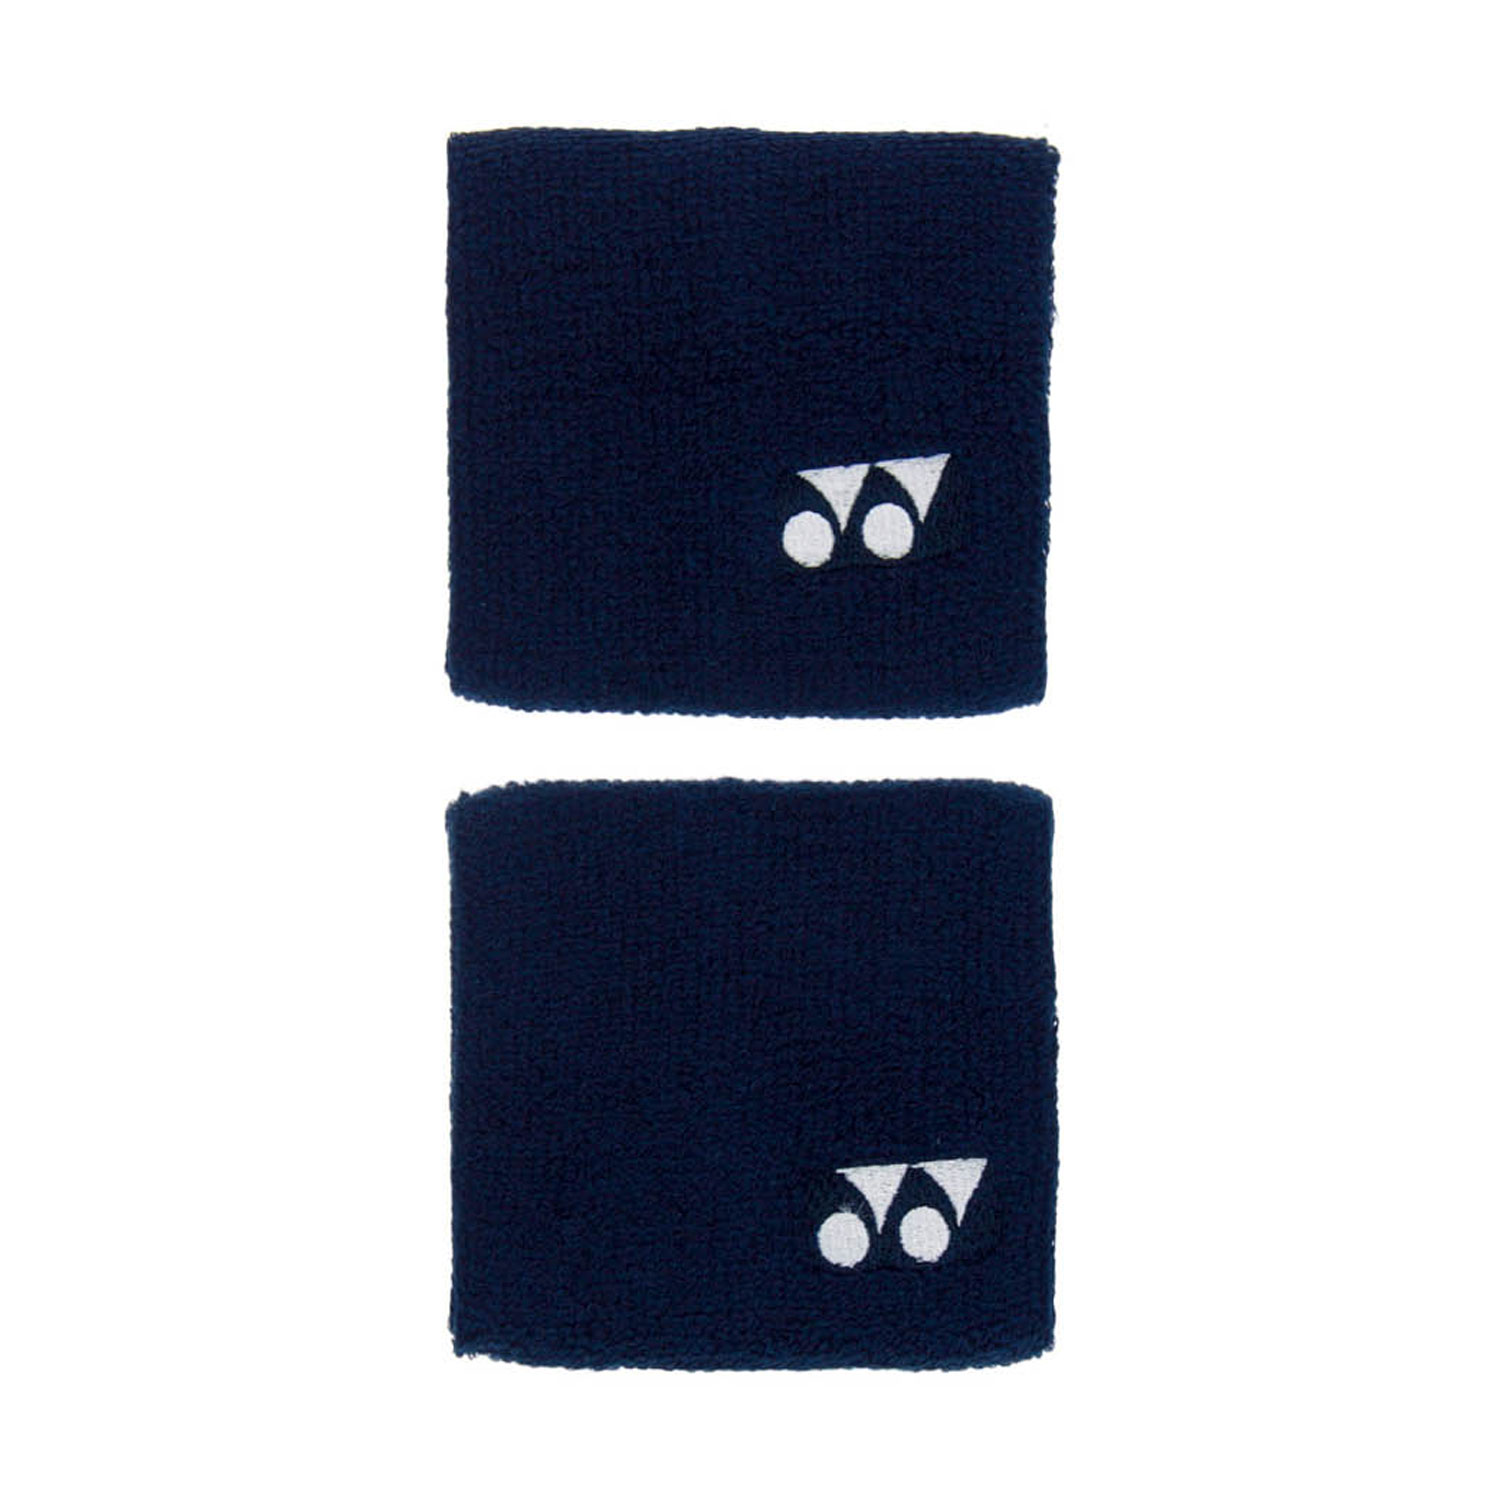 Yonex Logo Small Wristband - Navy